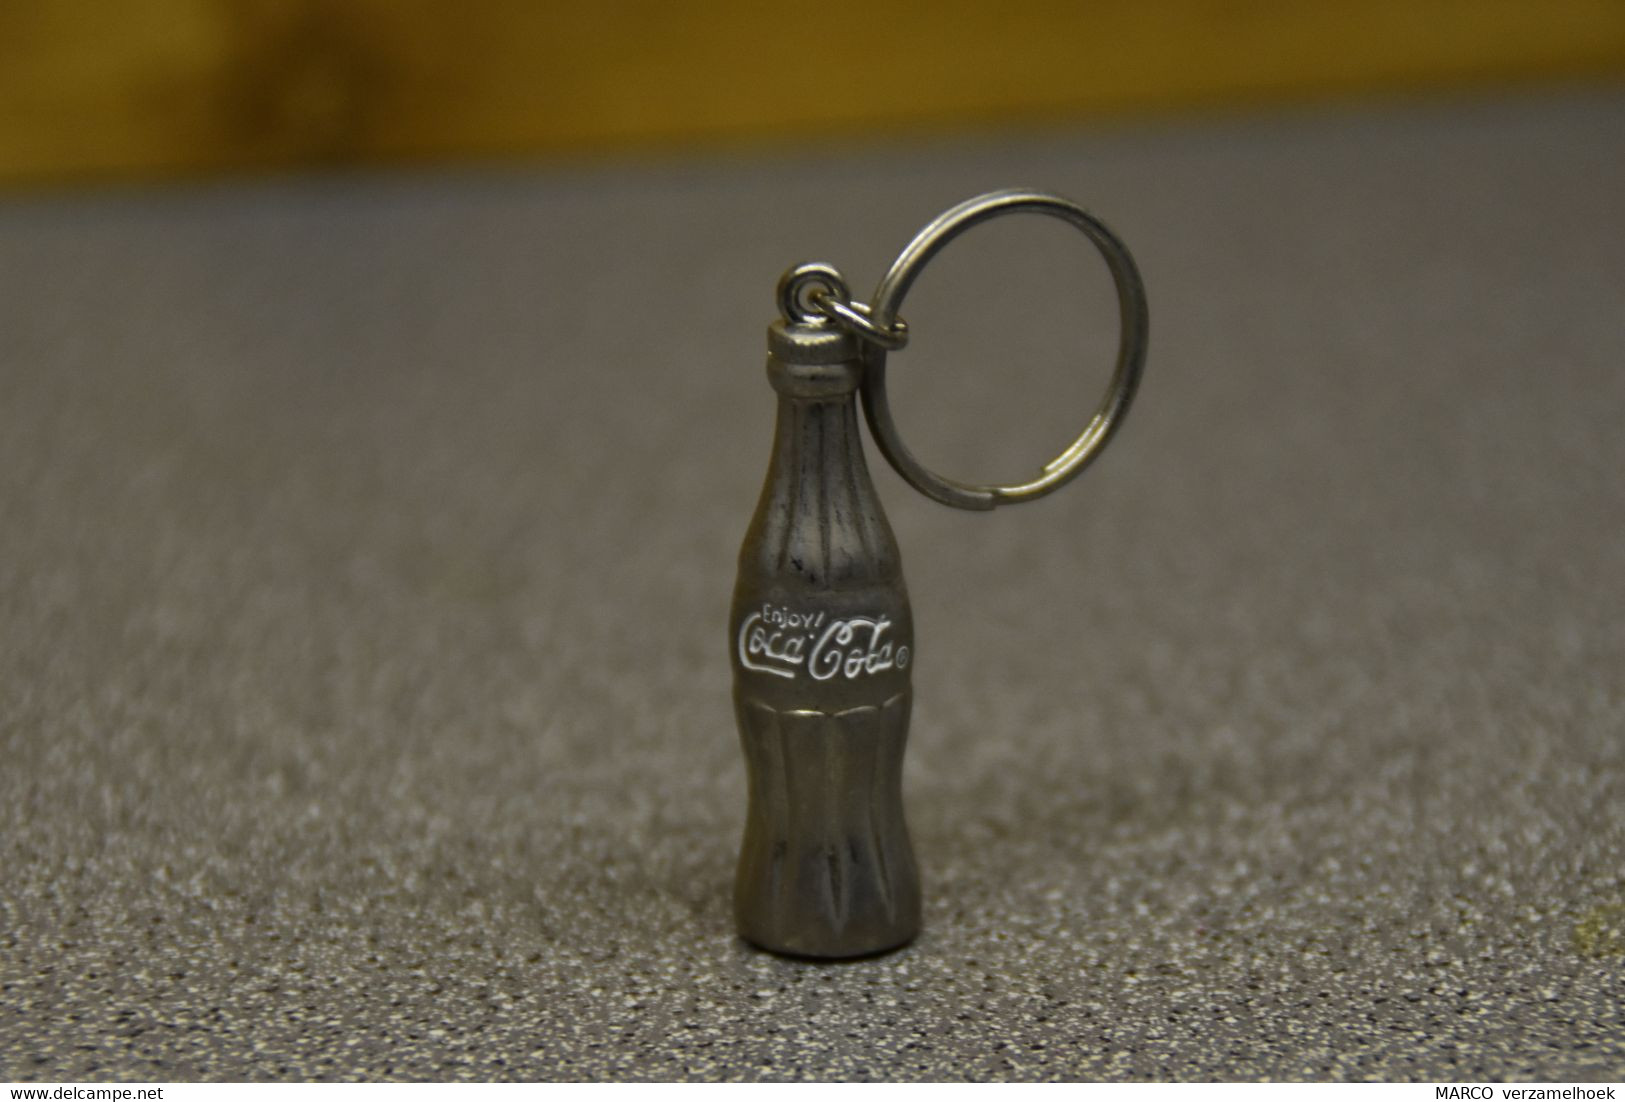 Coca-cola Company Porte Clé-sleutelhanger-key Chain - Portallaves